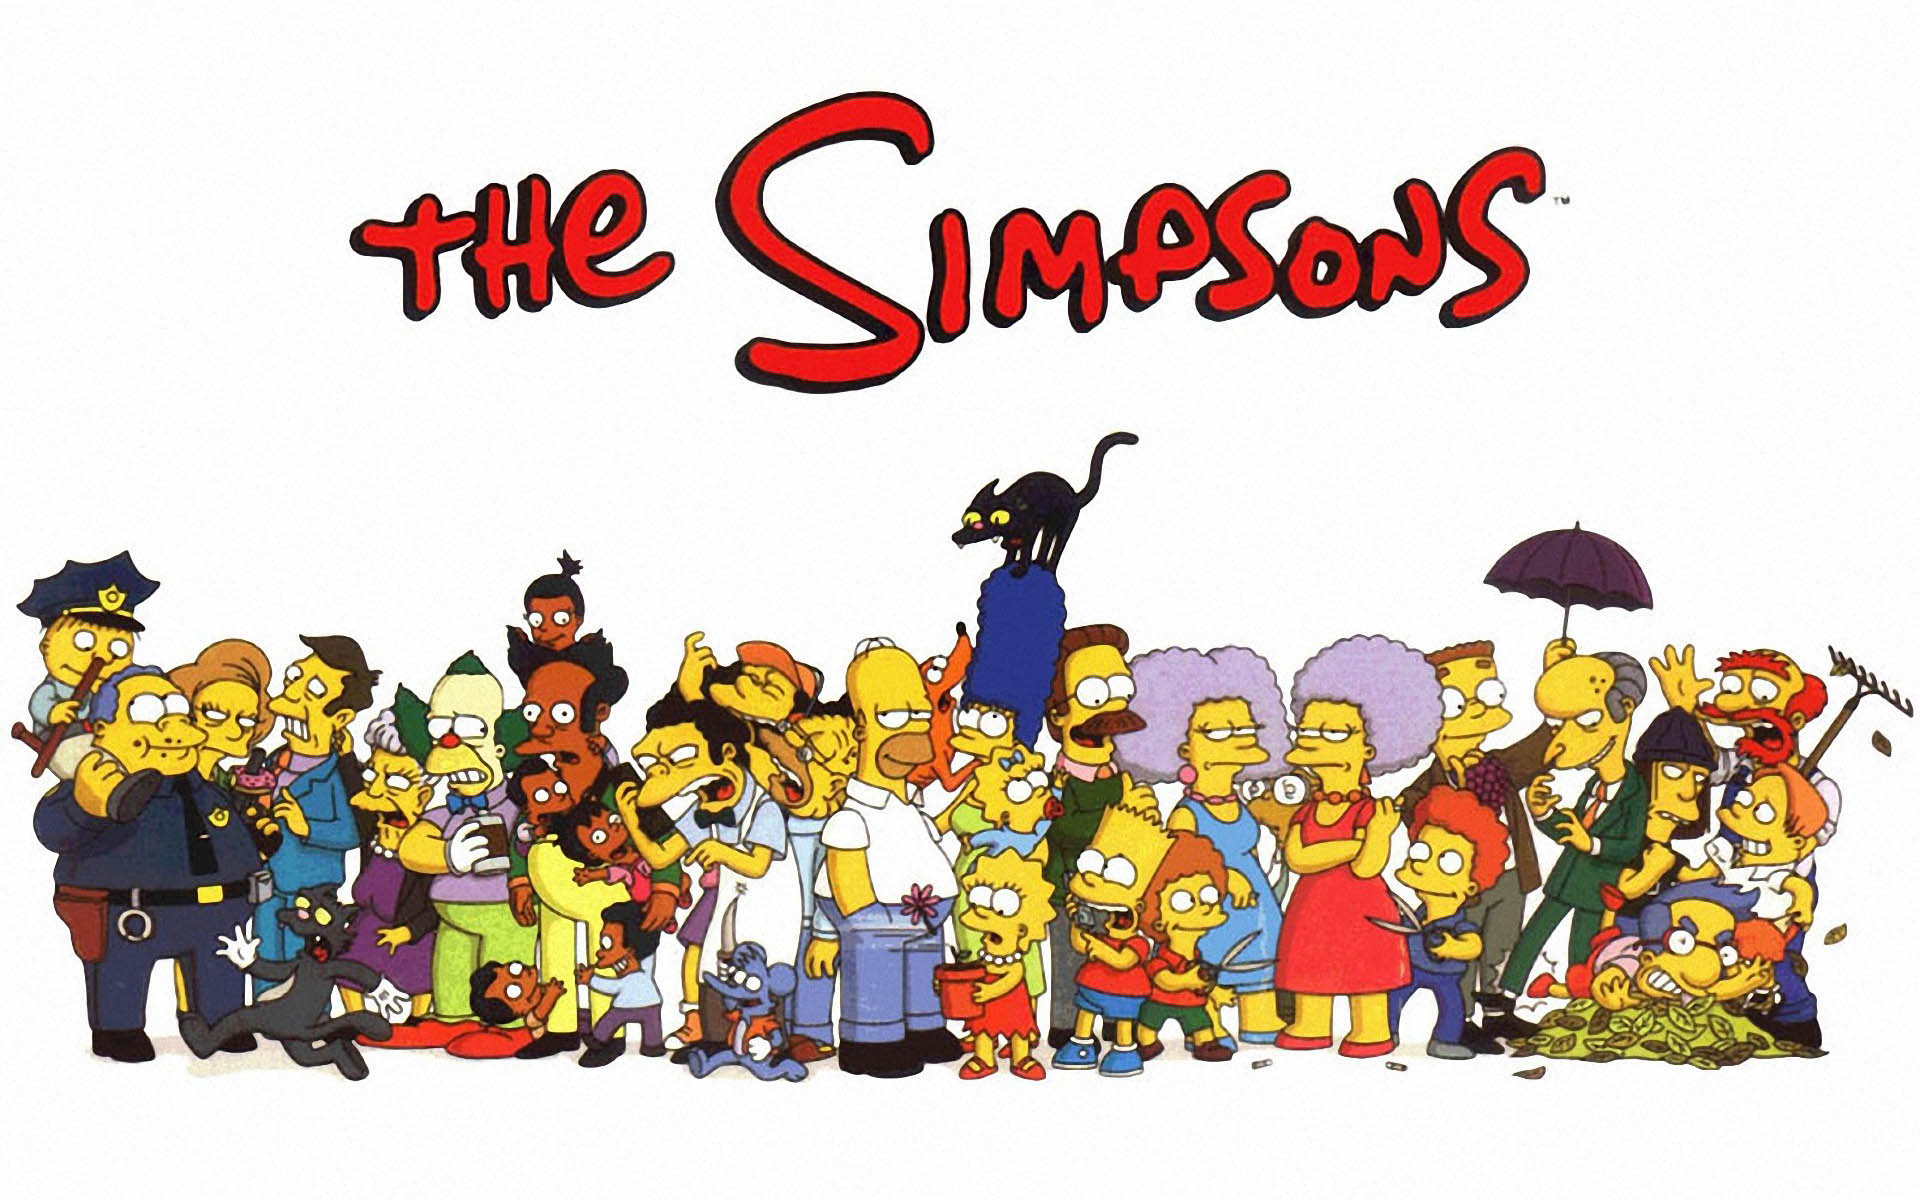 Cartoon The Simpsons - Wallpaper, High Definition, High Quality, Widescreen